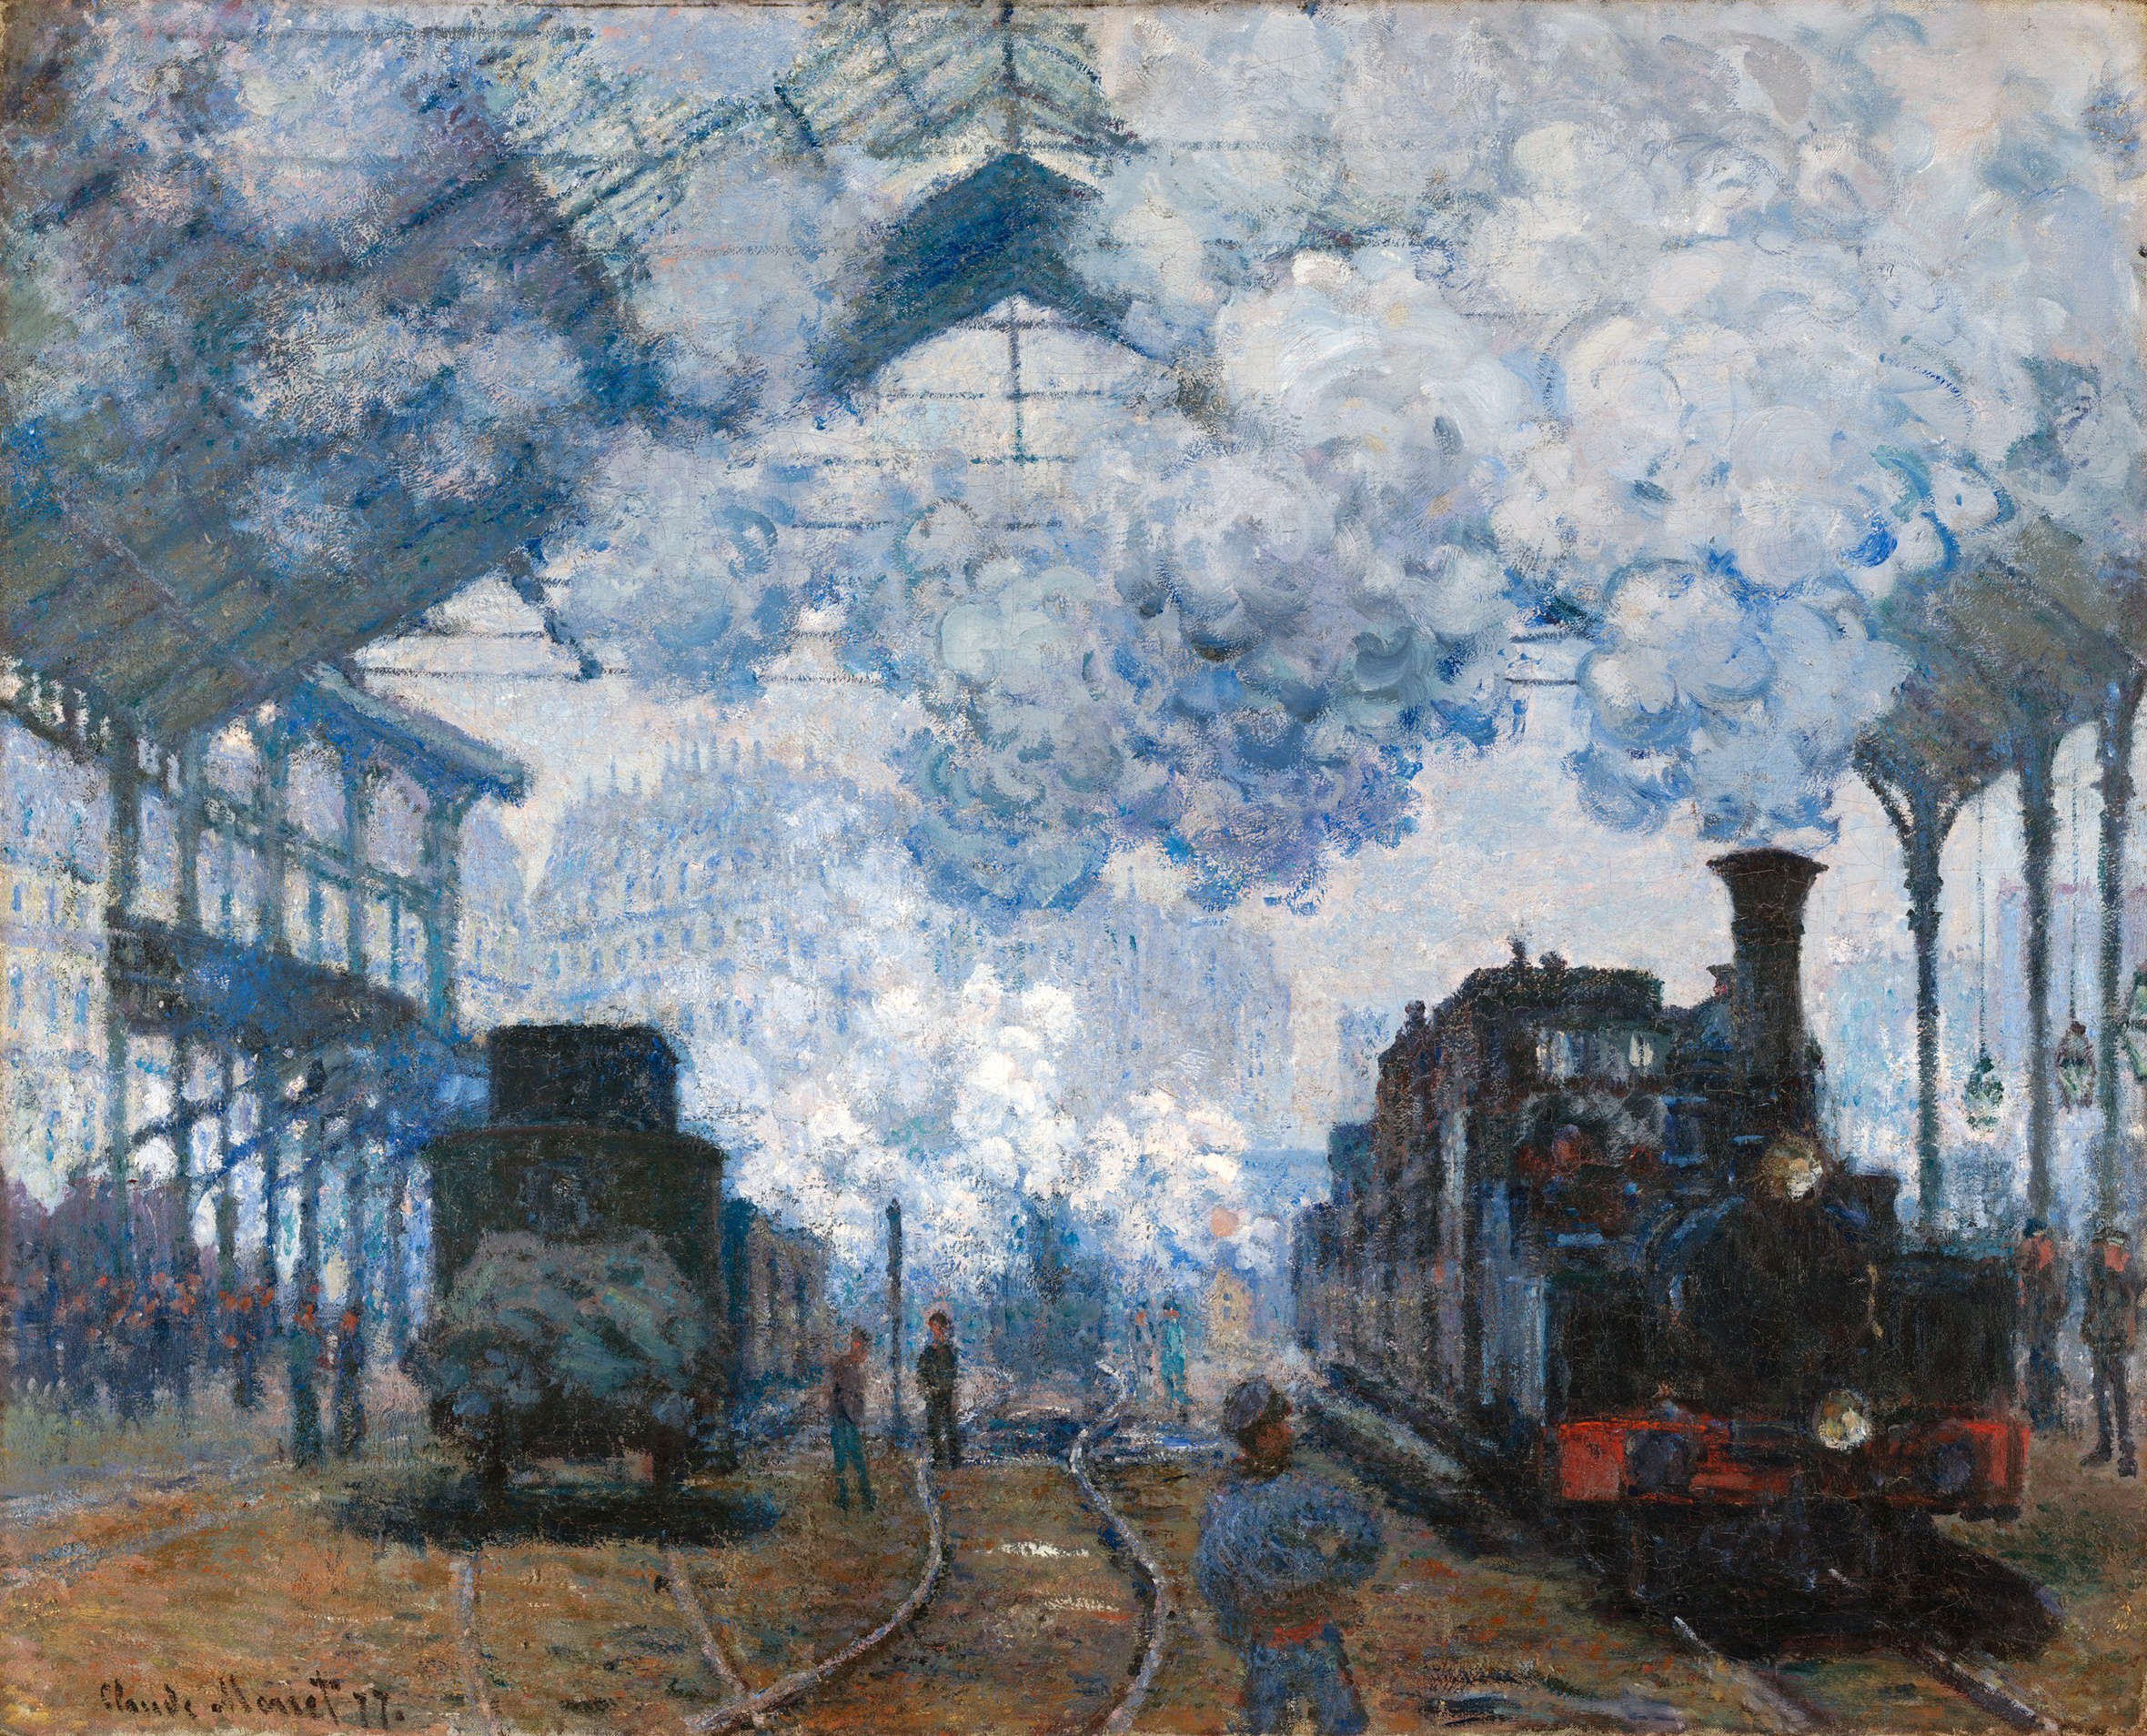 The Gare Saint-Lazare, Arrival of a Train by Claude Monet - 1877 - 80 x 98 cm Harvard Art Museums